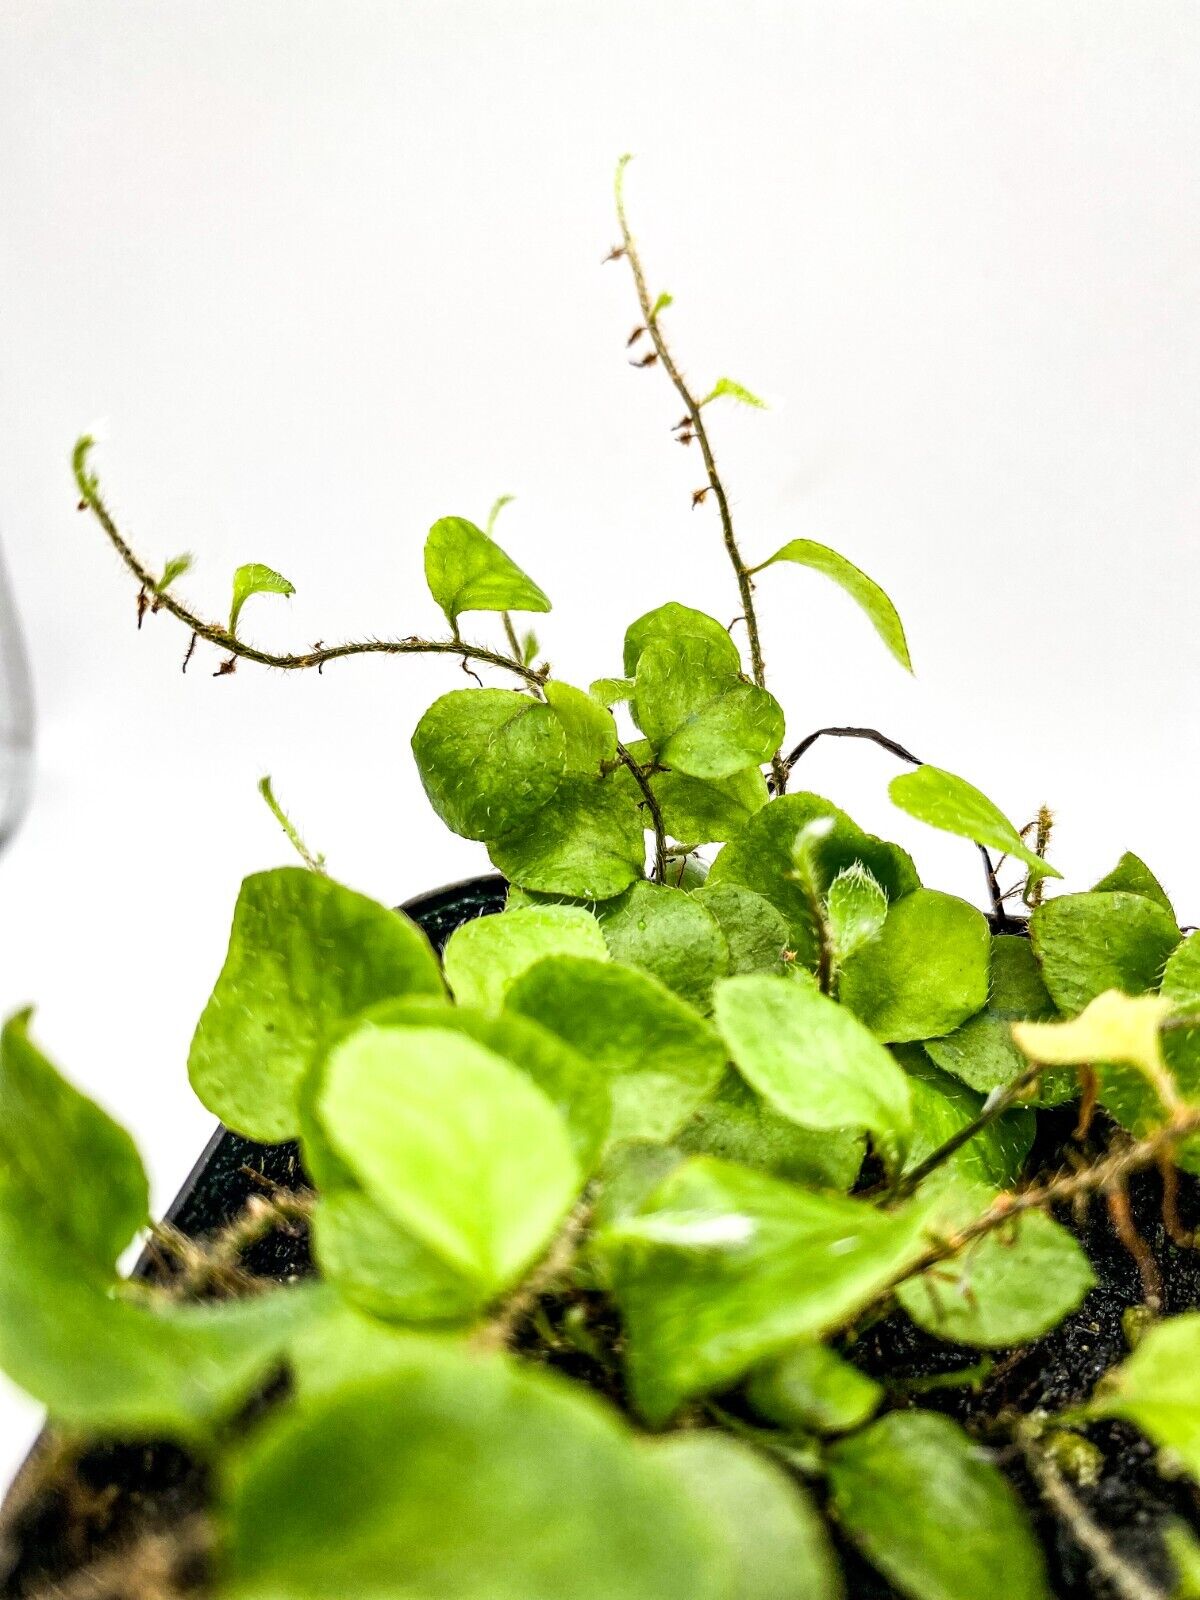 Microgramma tecta (2.5" Pot) Miniature Epiphytic Fern /Dart Frog Terrarium Plant Creation Cultivated Microgramma tecta - фотография #4